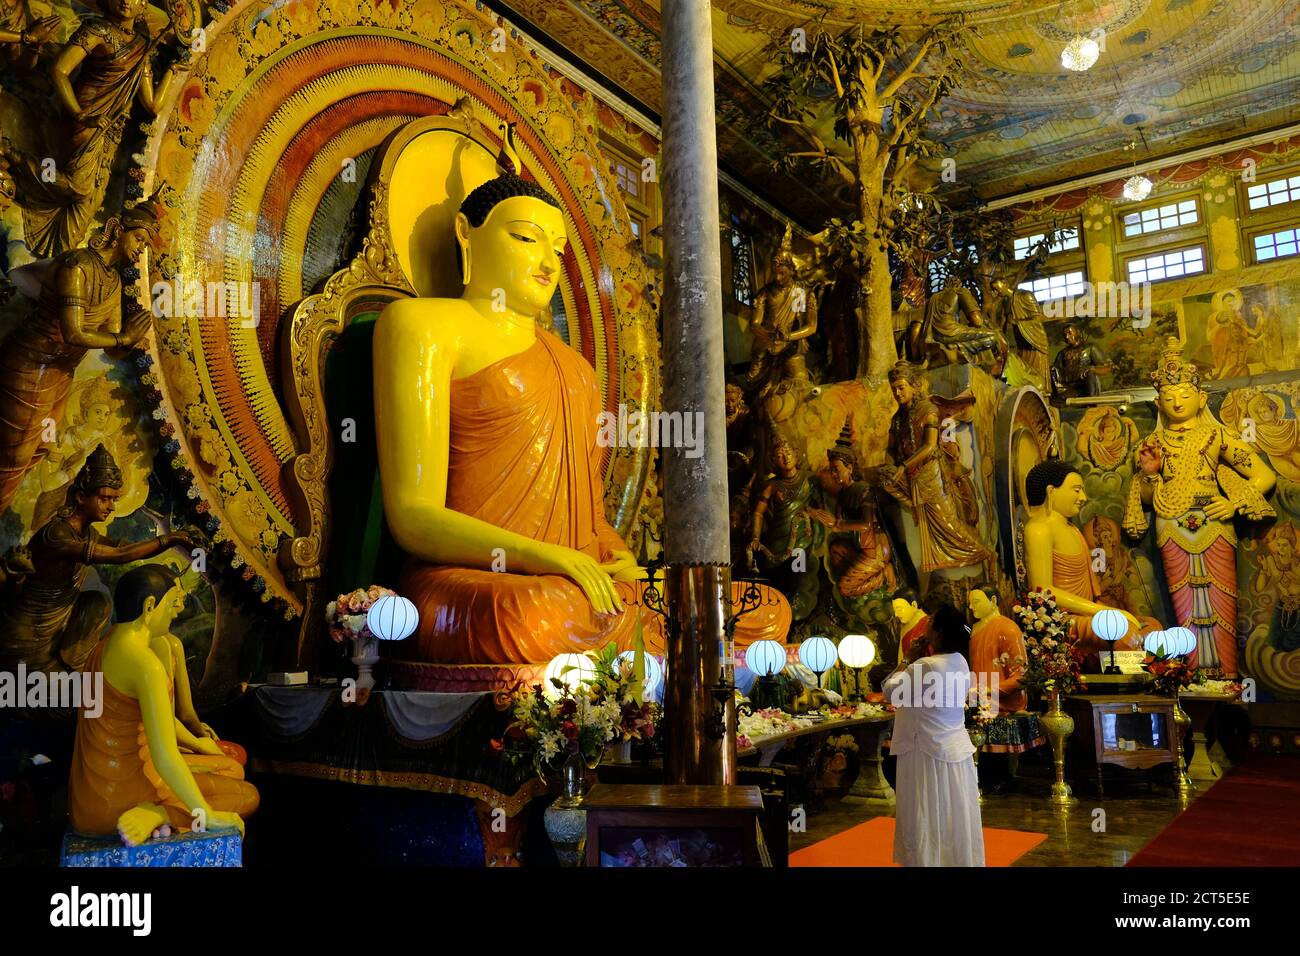 Sri Lanka Colombo - Old Buddhist temple Gangaramaya Prayer in front of Buddha statues Stock Photo